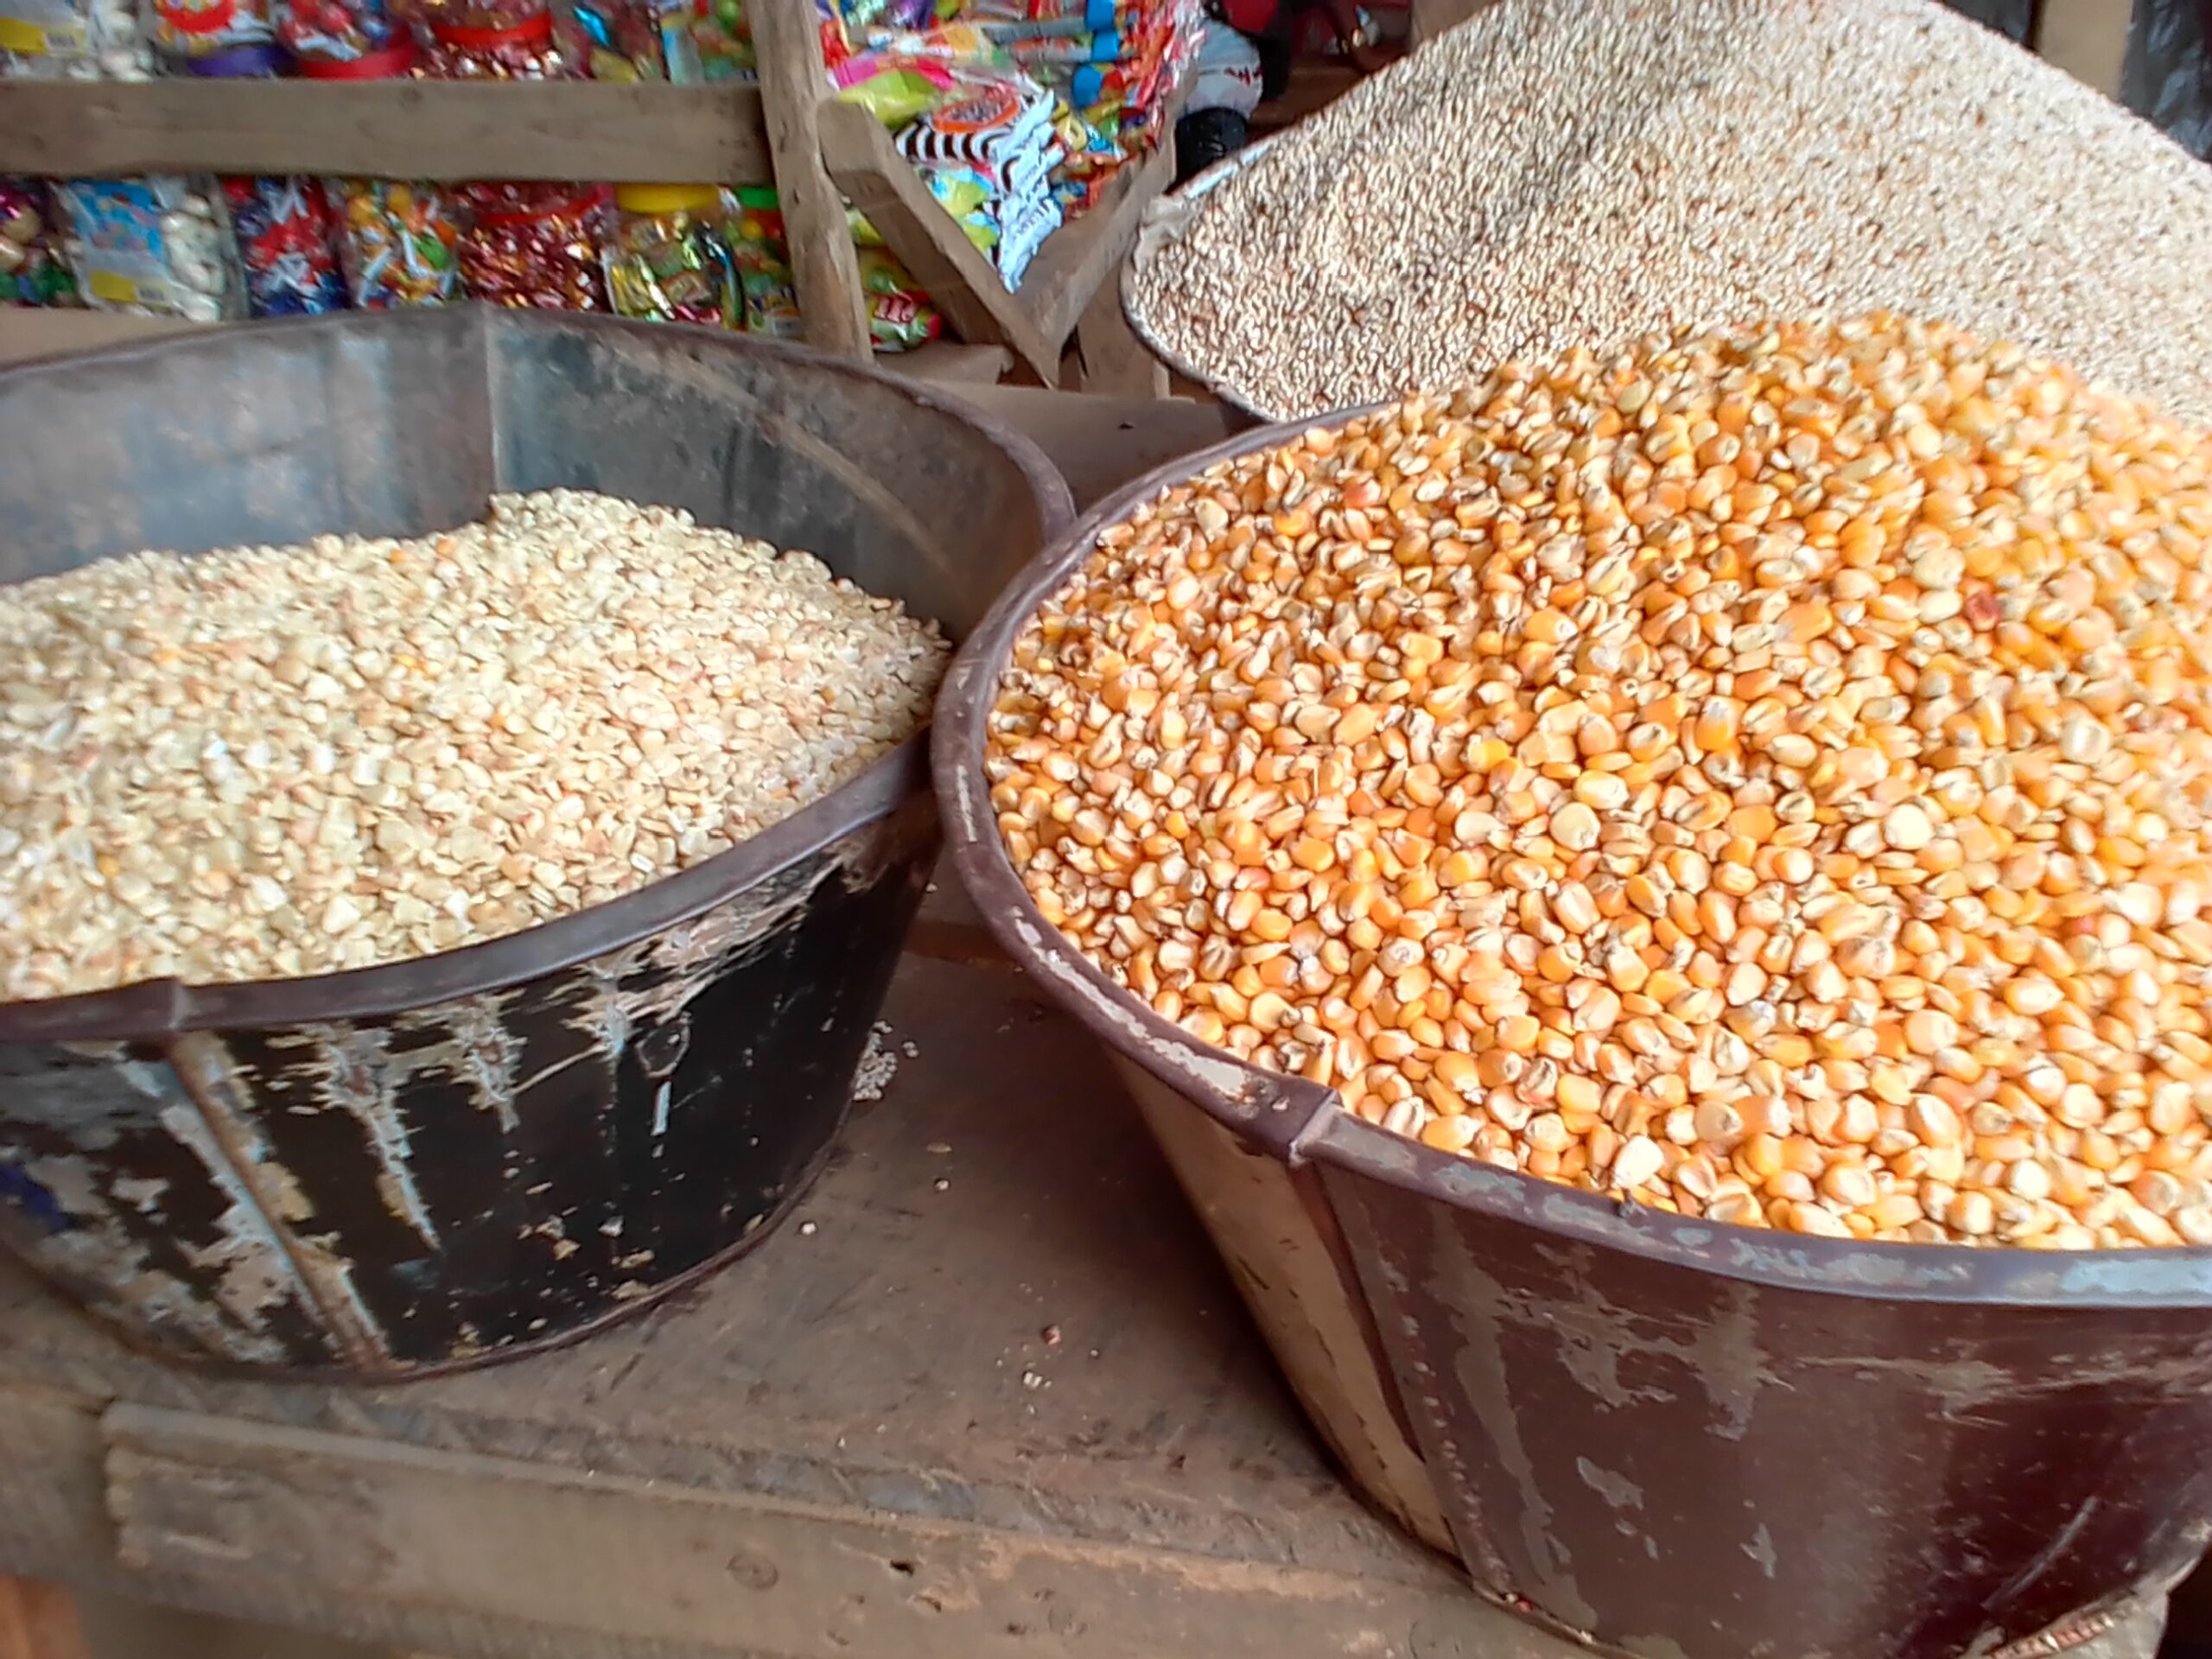 Maize price in Nigeria